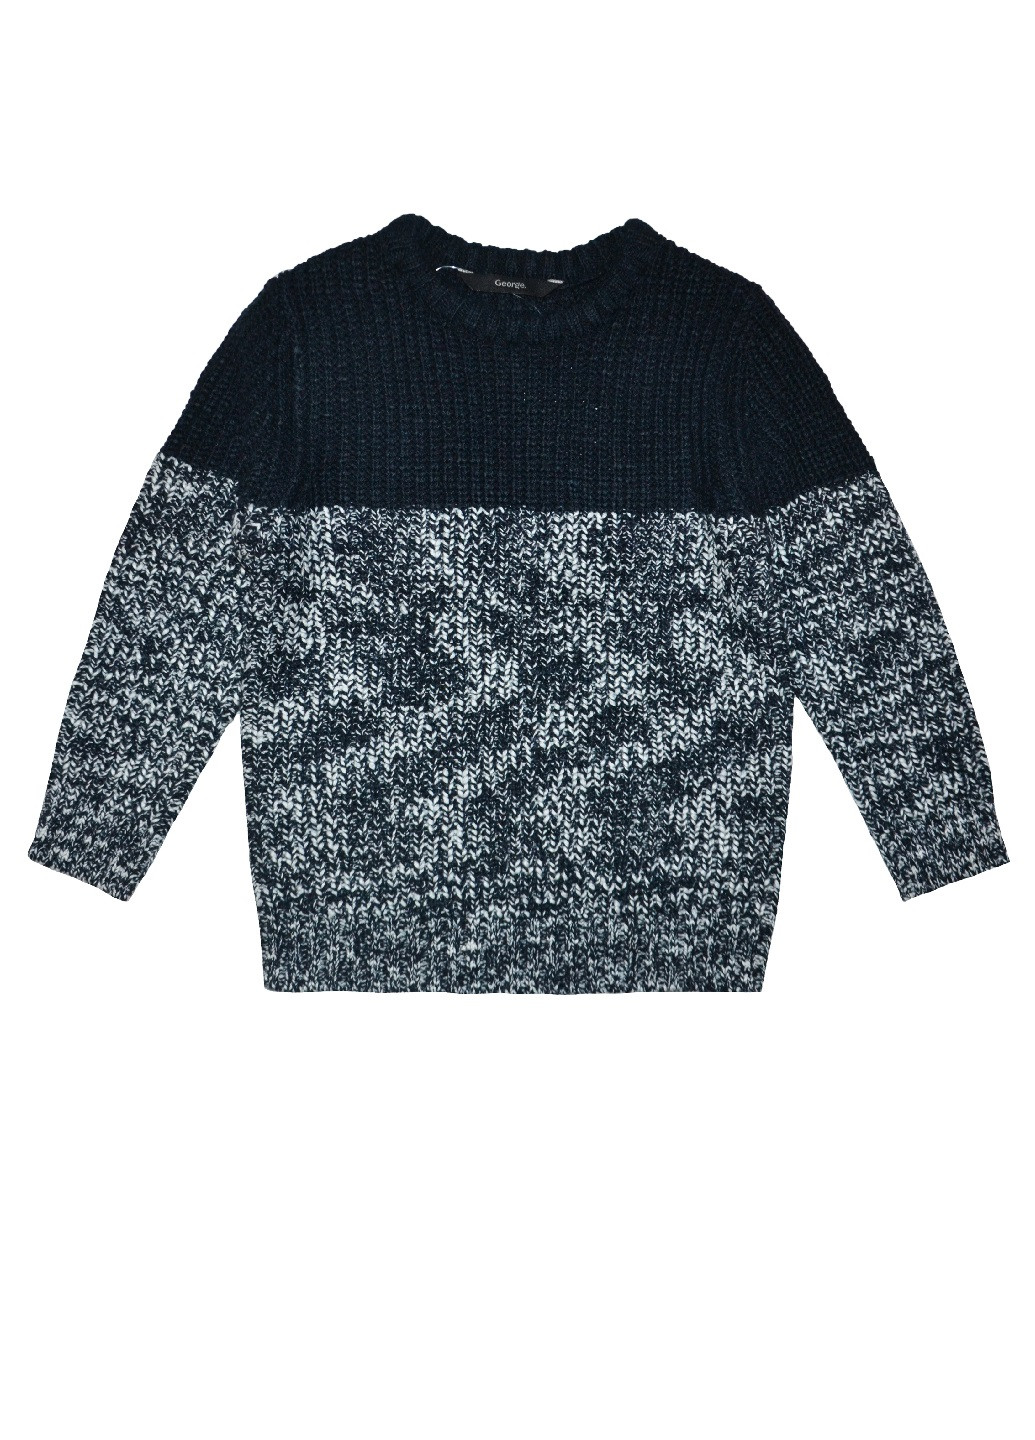 Темно-синий демисезонный свитер пуловер George